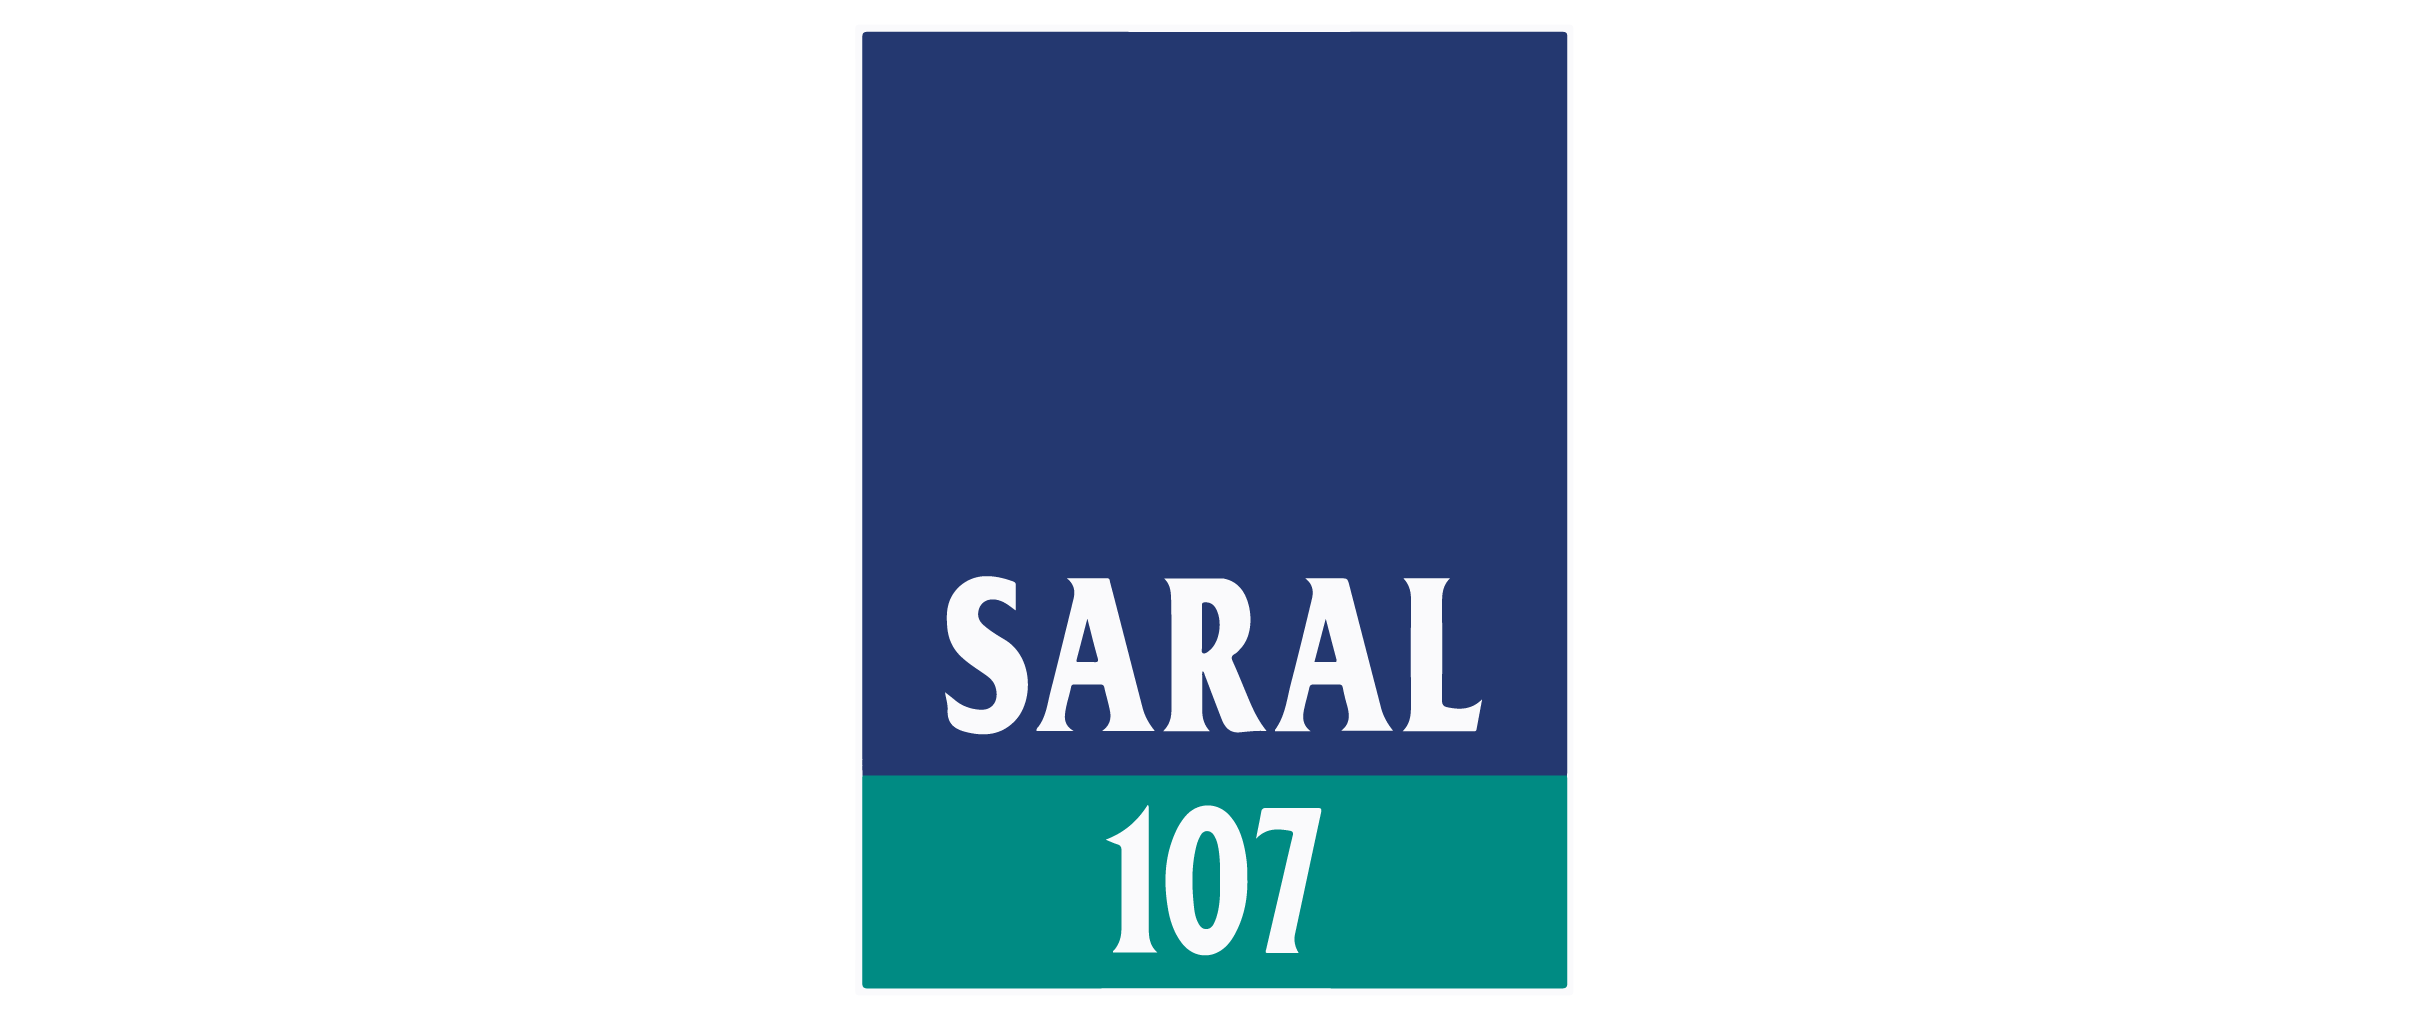 Saral 107